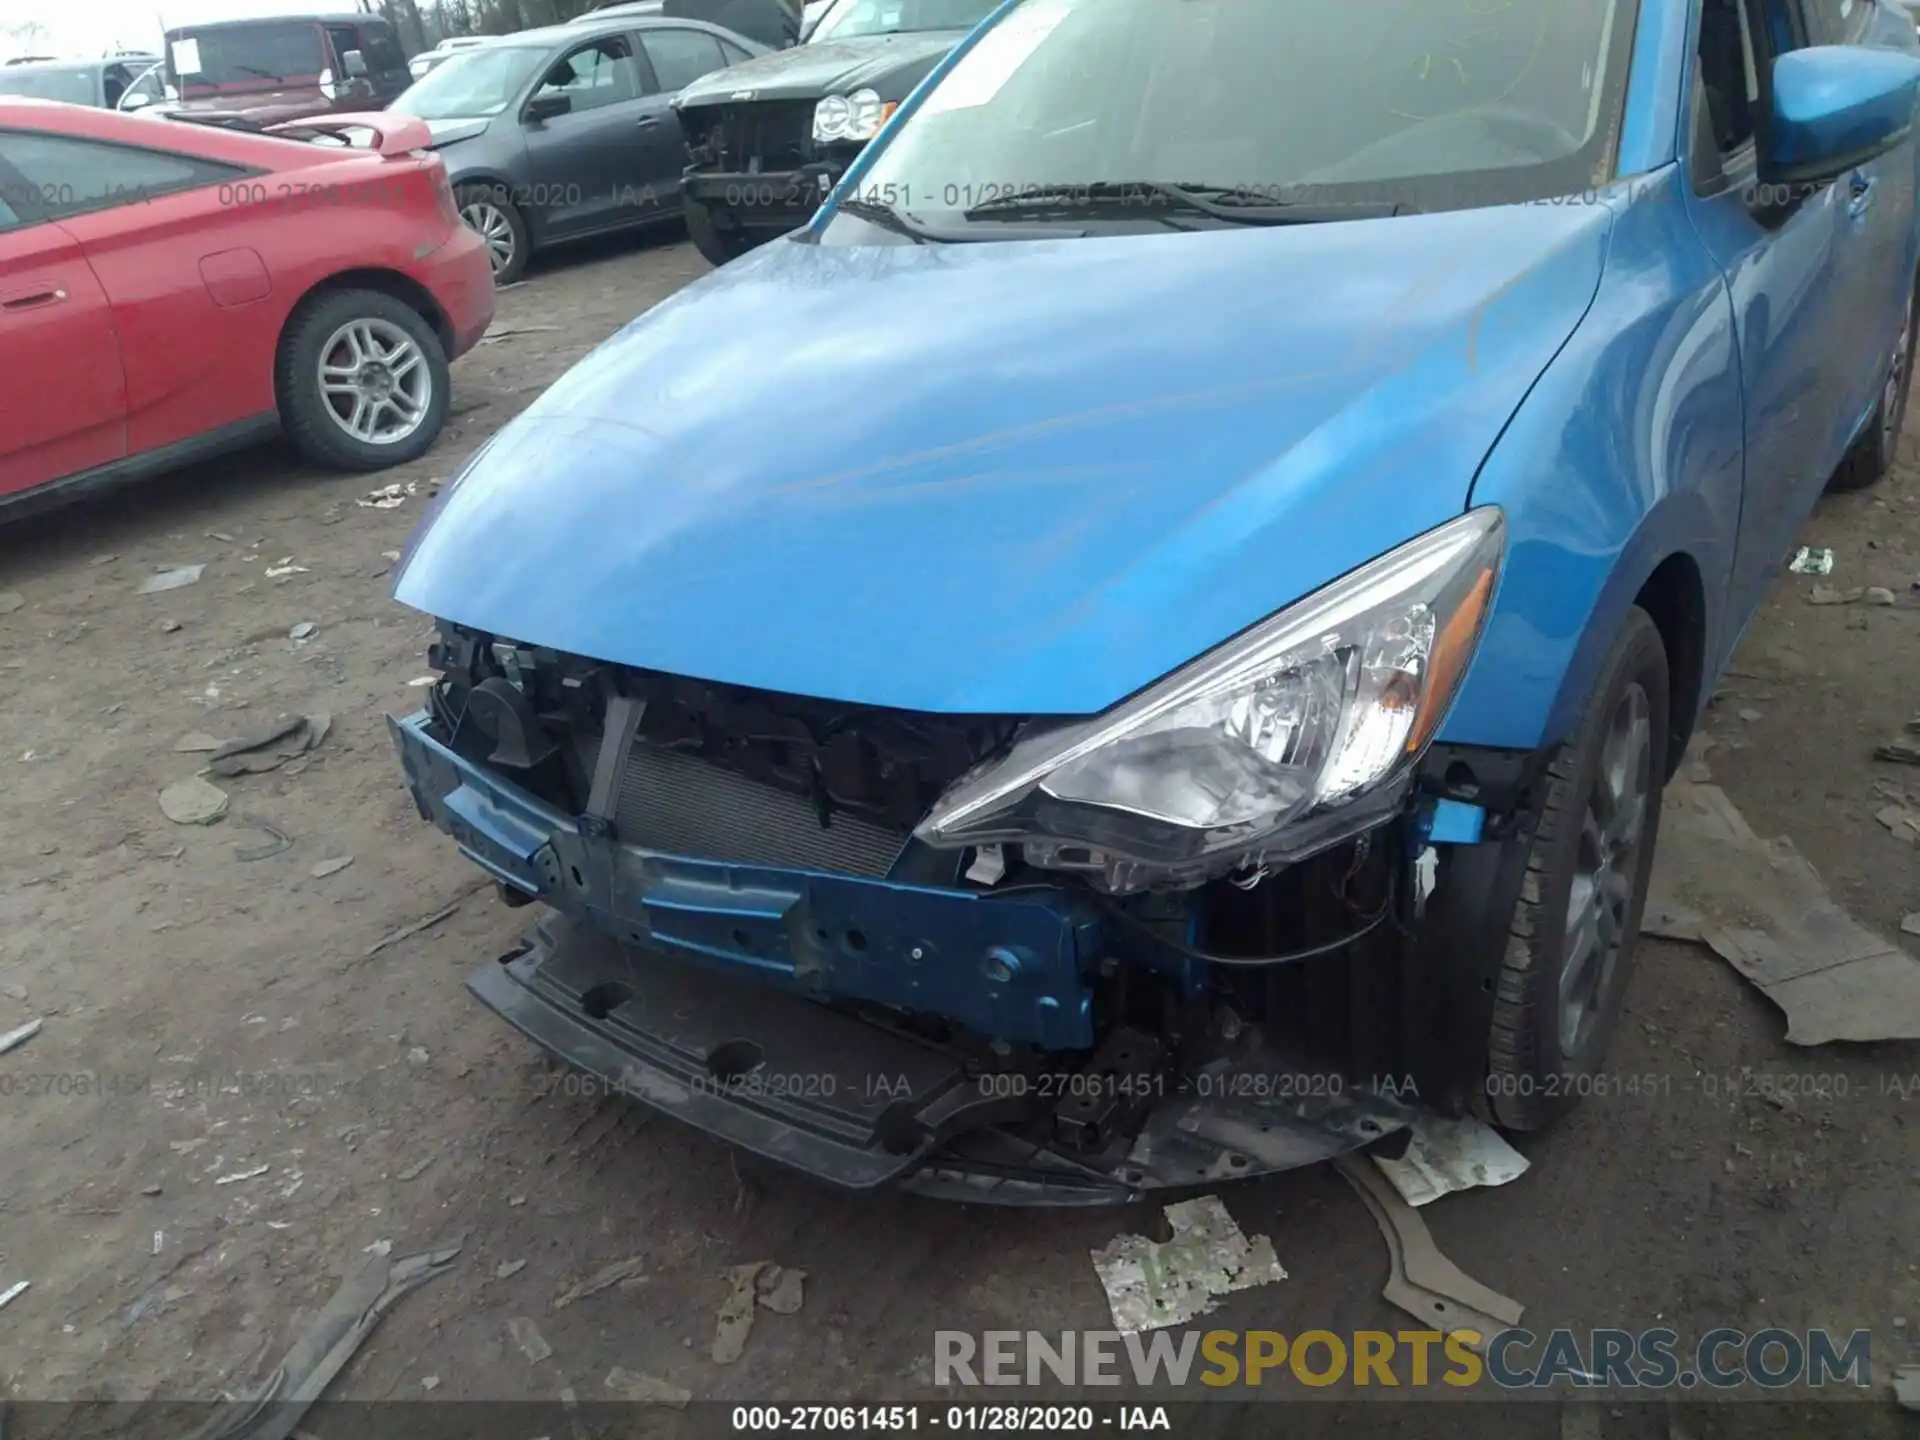 6 Photograph of a damaged car 3MYDLBJV1LY700622 TOYOTA YARIS 2020